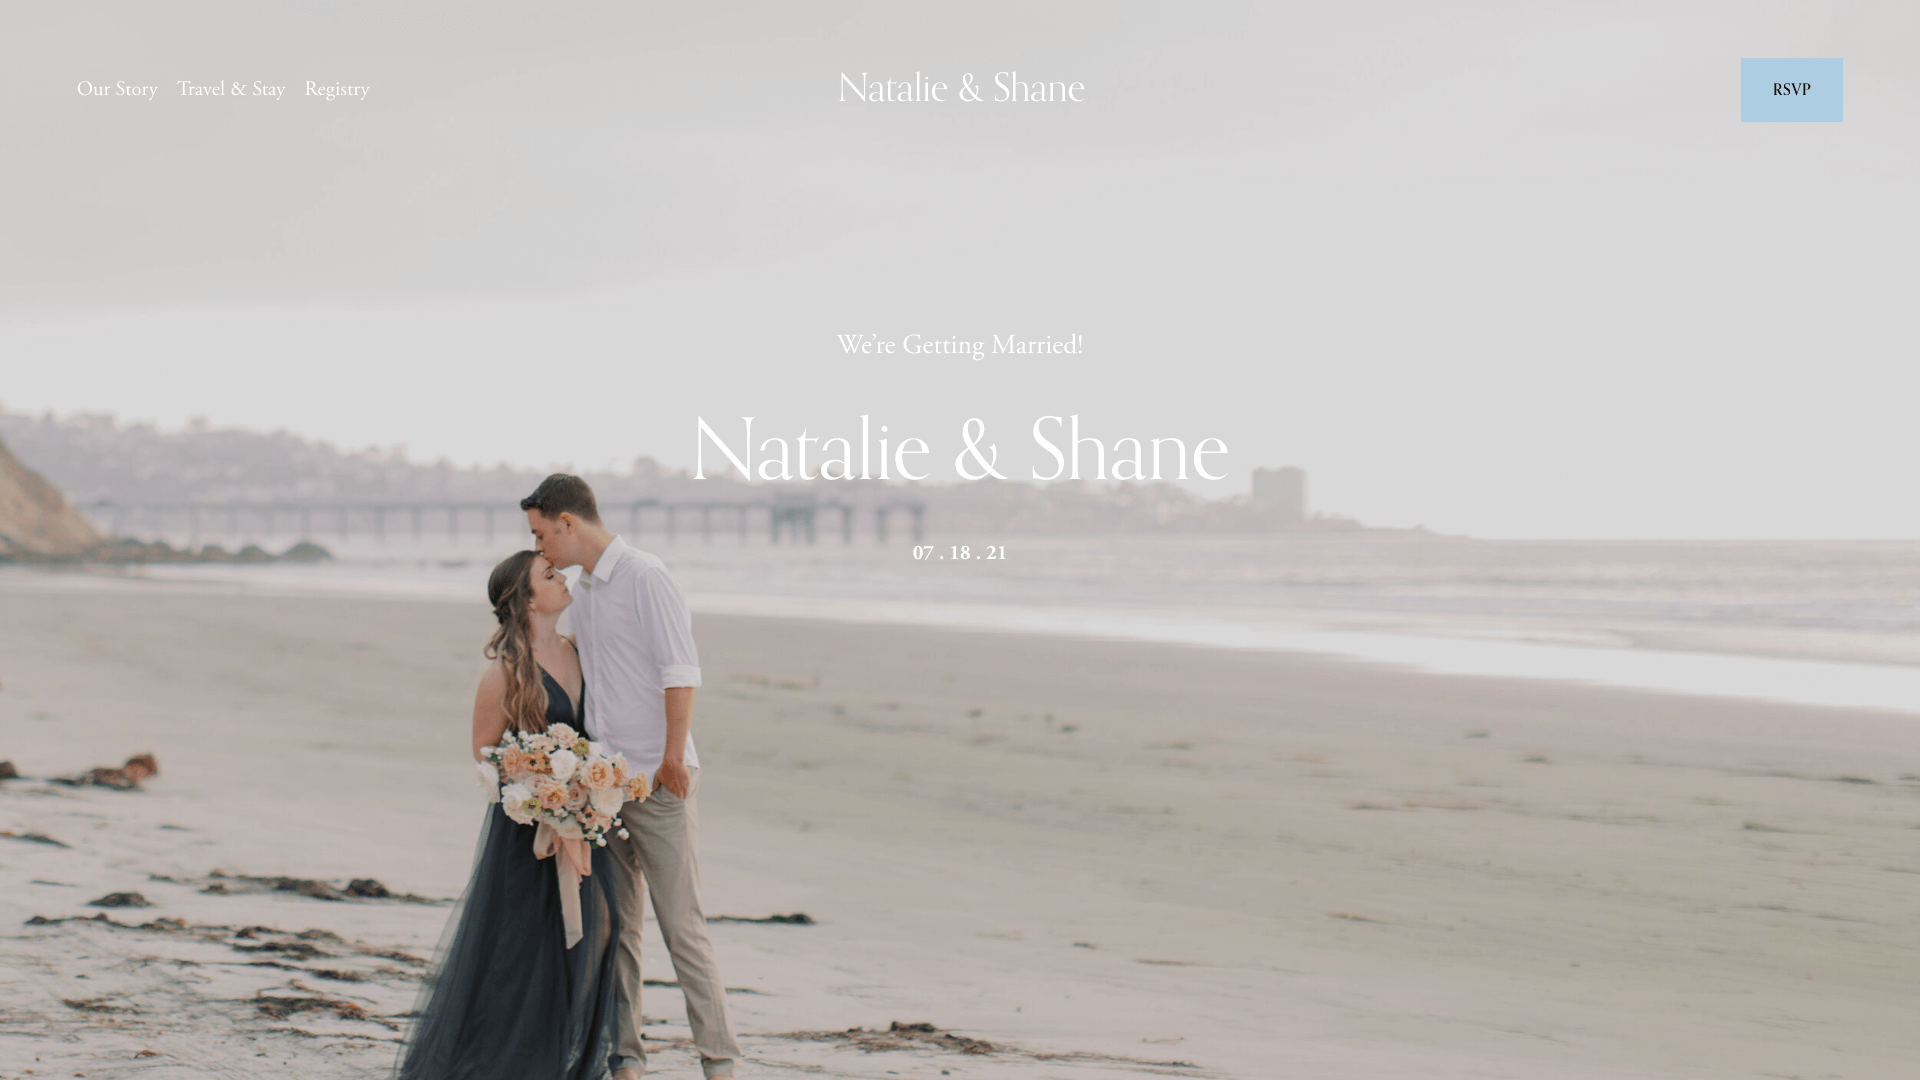 Screenshot of the Natalie & Shane website